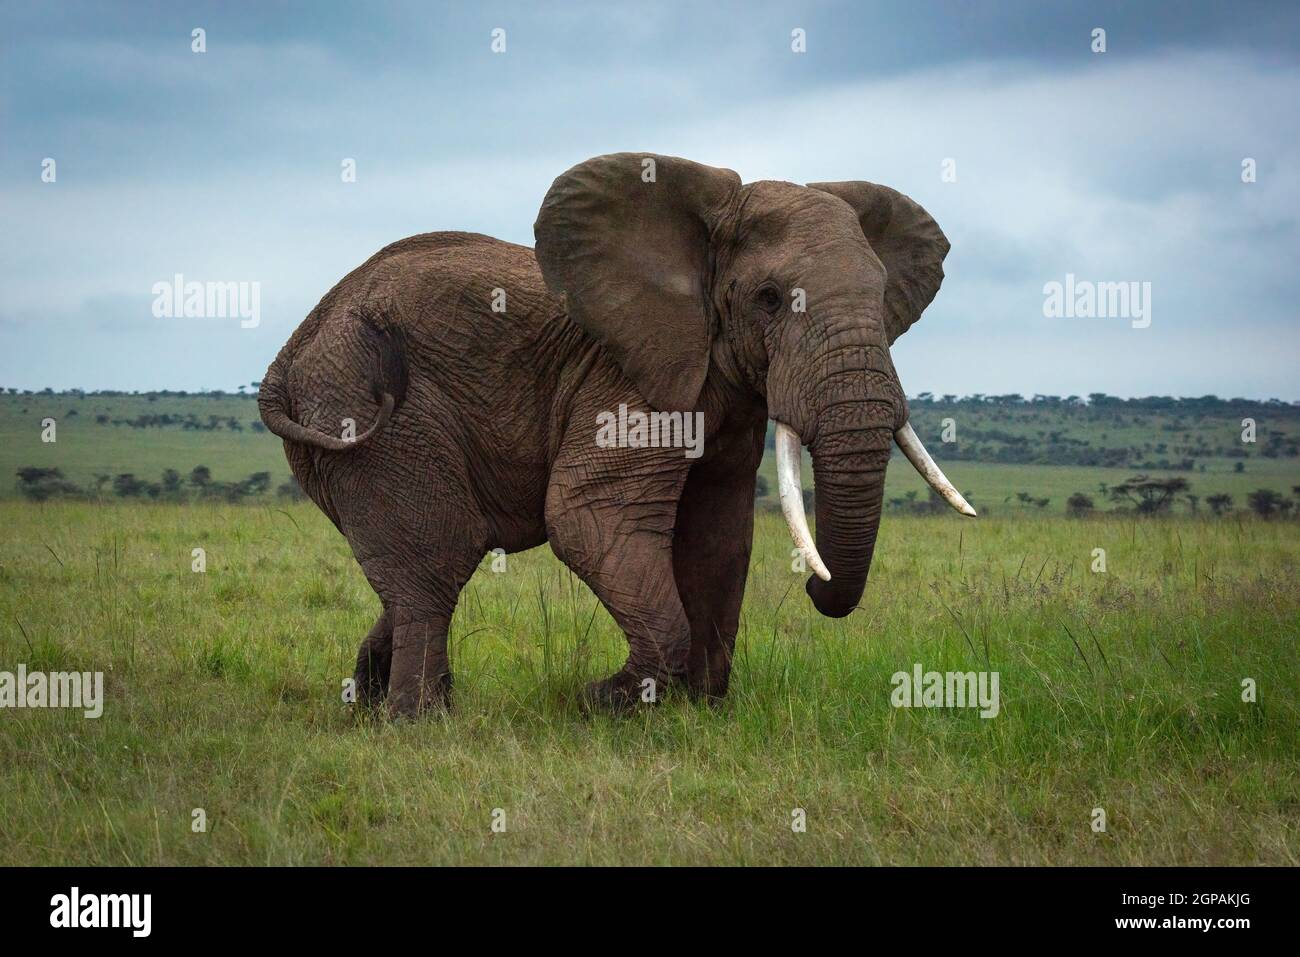 El elefante africano del arbusto camina a través de la llanura verde Foto de stock